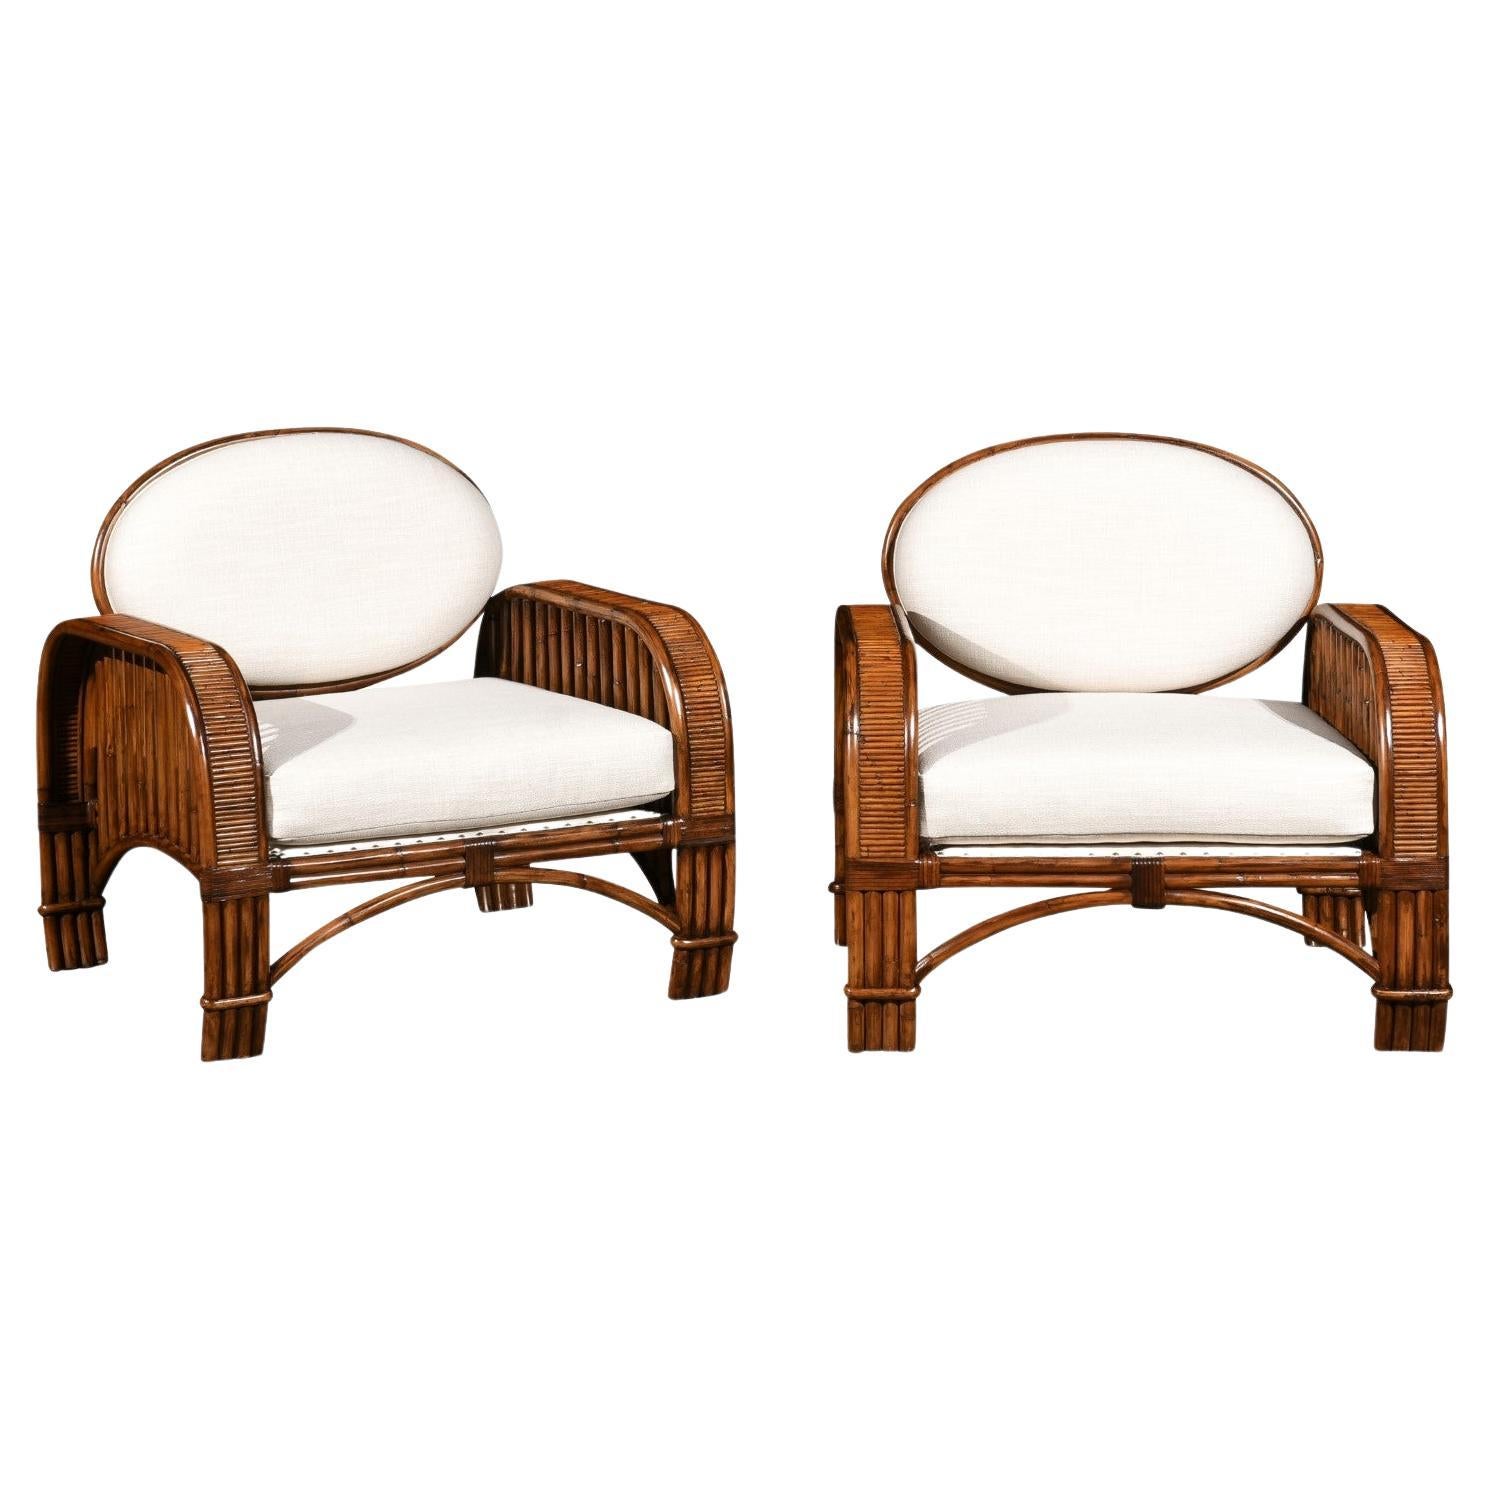 Striking Pair of Art Deco Influenced Club Chairs by Brown Jordan, circa 1980